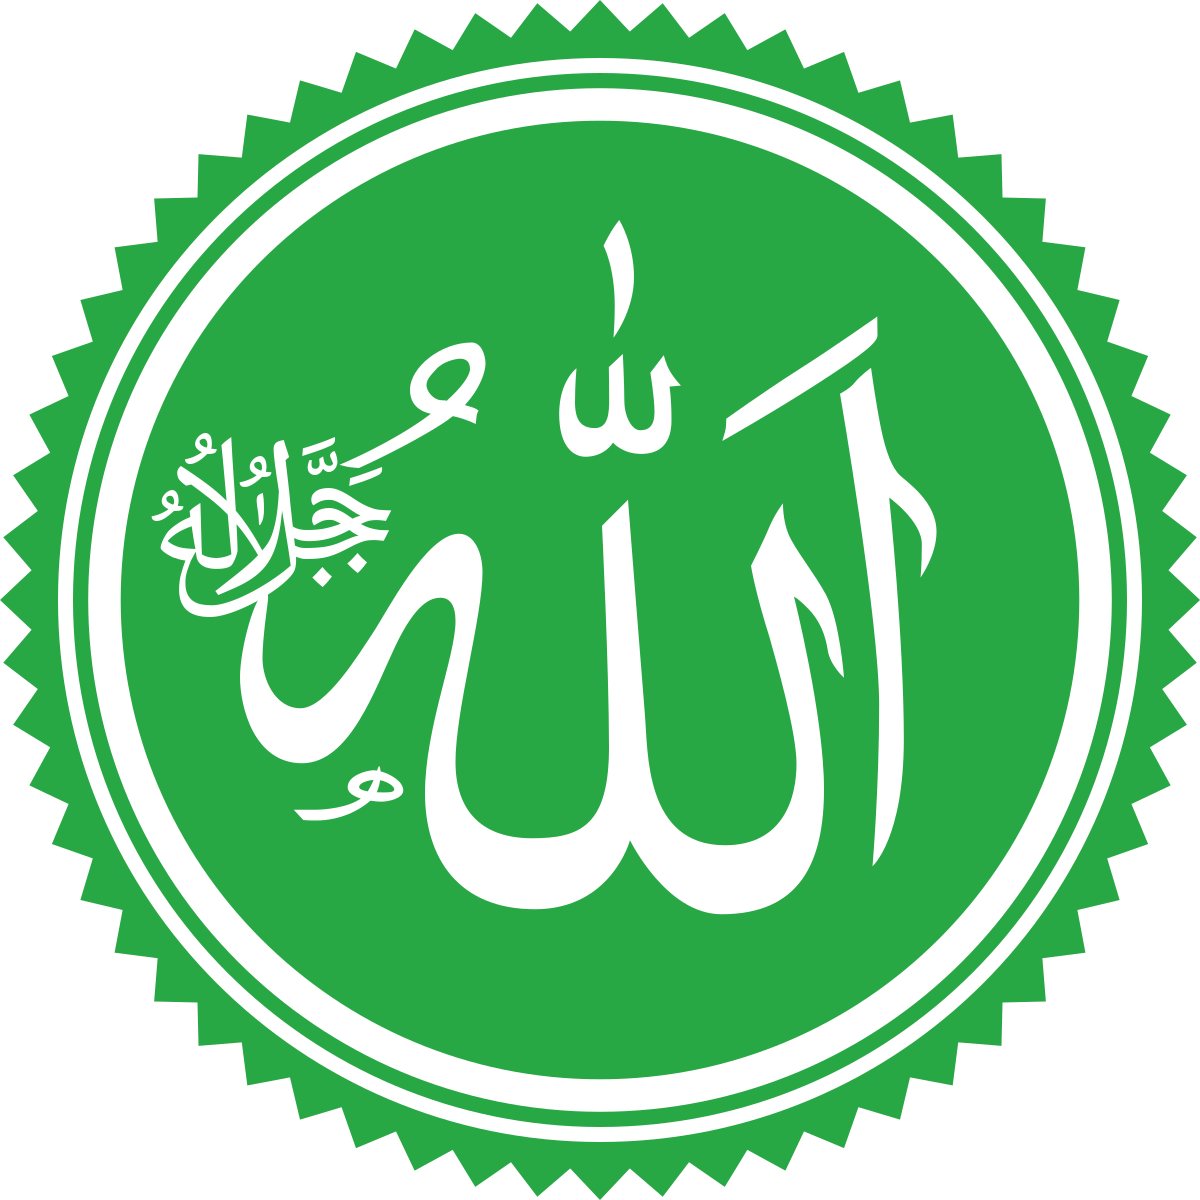 Allah Symbols of Islam Religious symbol God in Islam, arabic calligraphy  ramadan kareem, text, logo, monochrome png | Klipartz